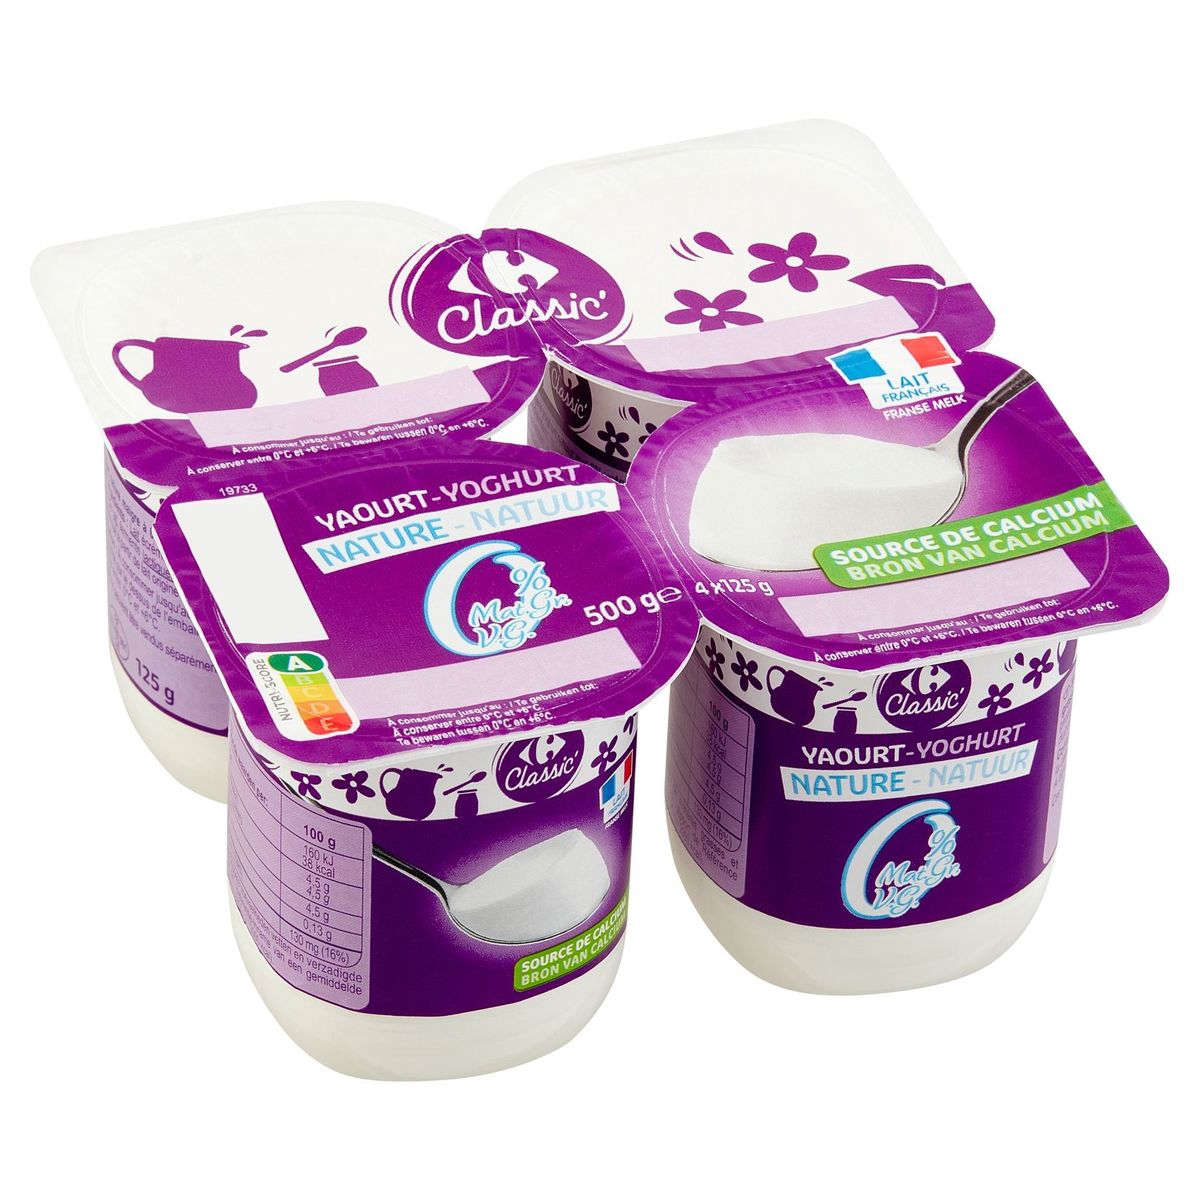 Carrefour Classic' Yoghurt Natuur 0% V.G. 4 x 125 g